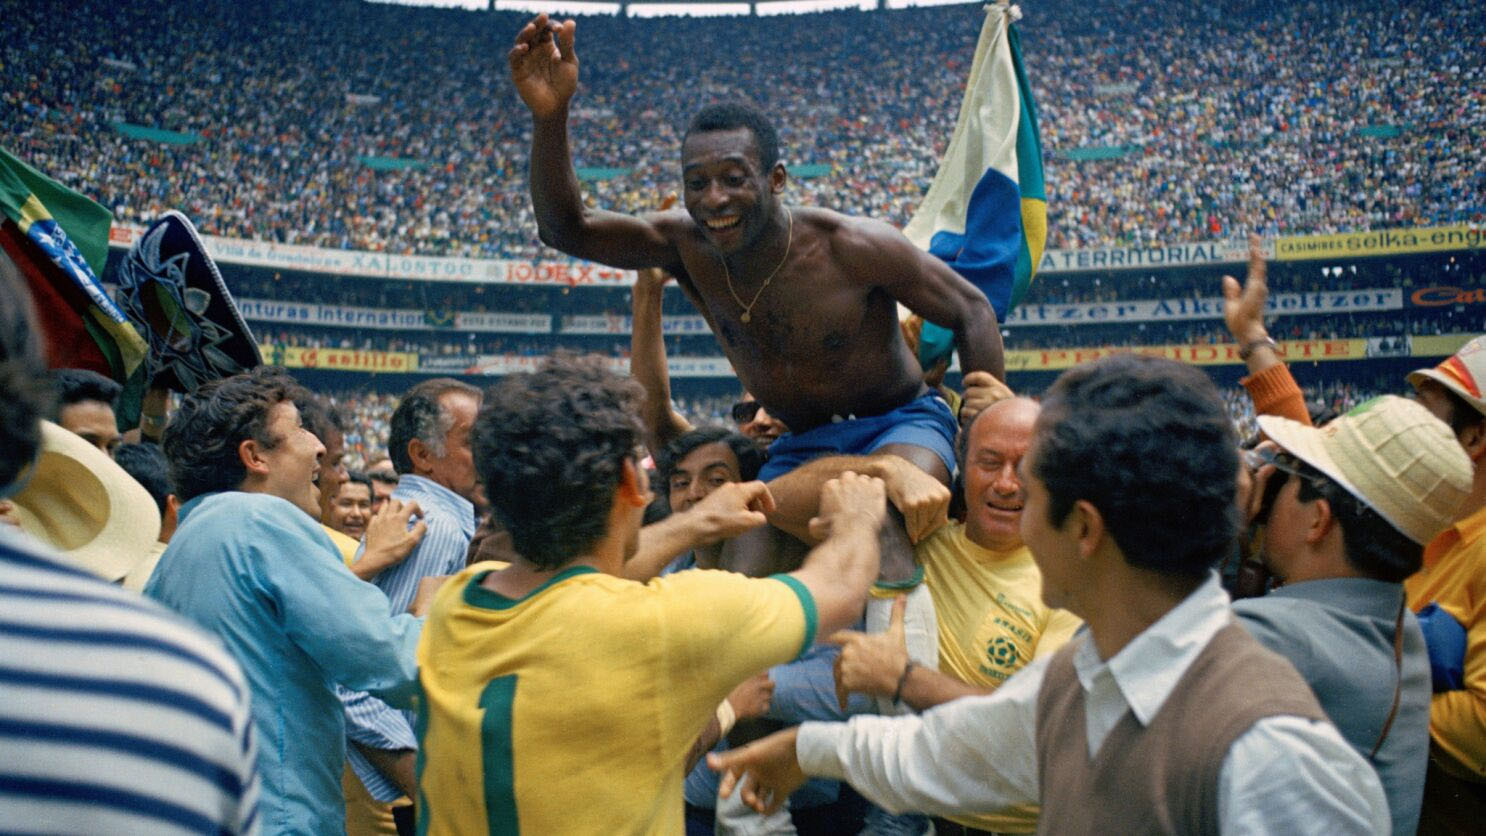 The life of 'football king' Pele through photos - Football